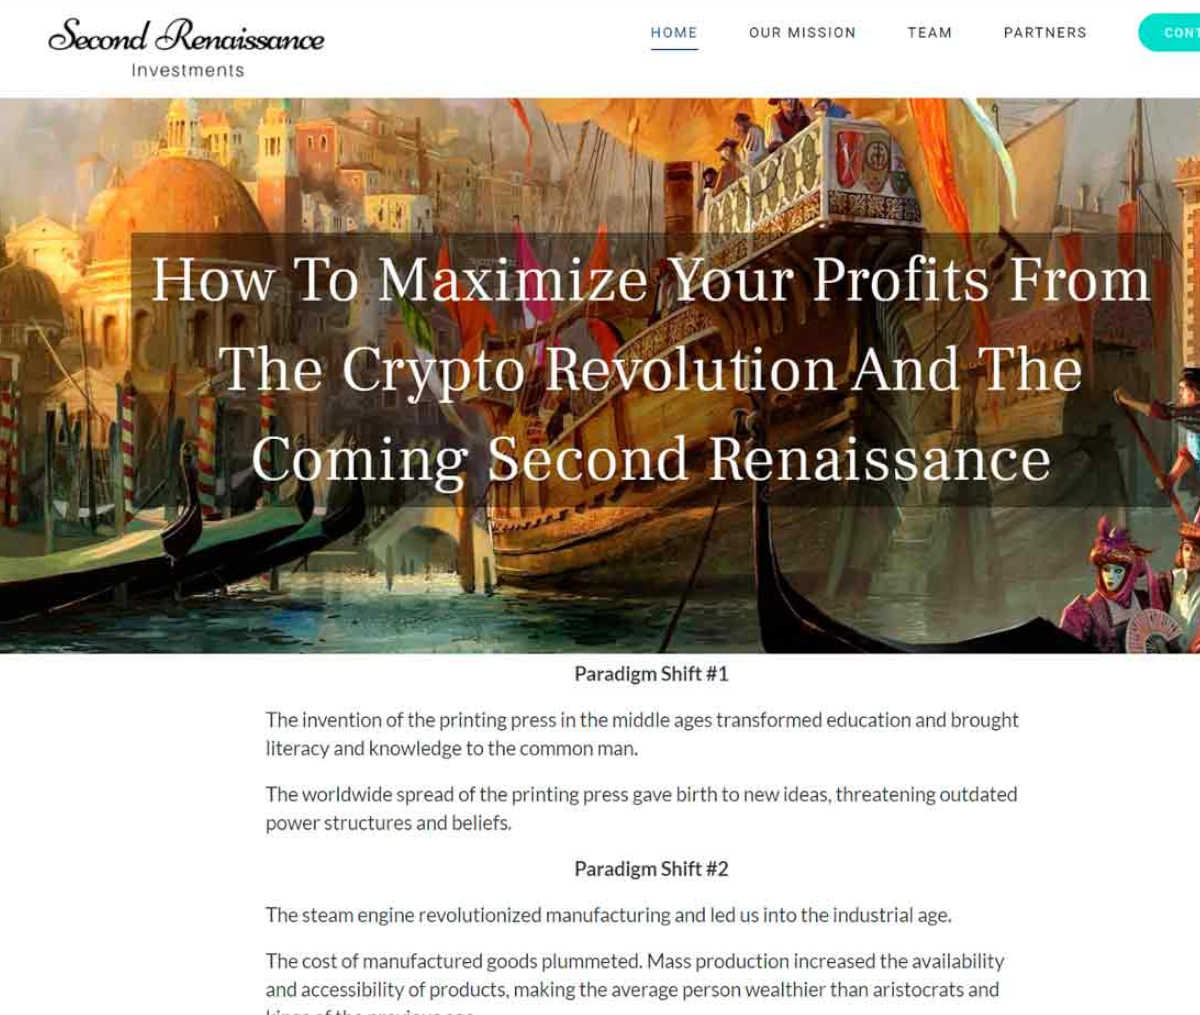 Página web de Second Renaissance